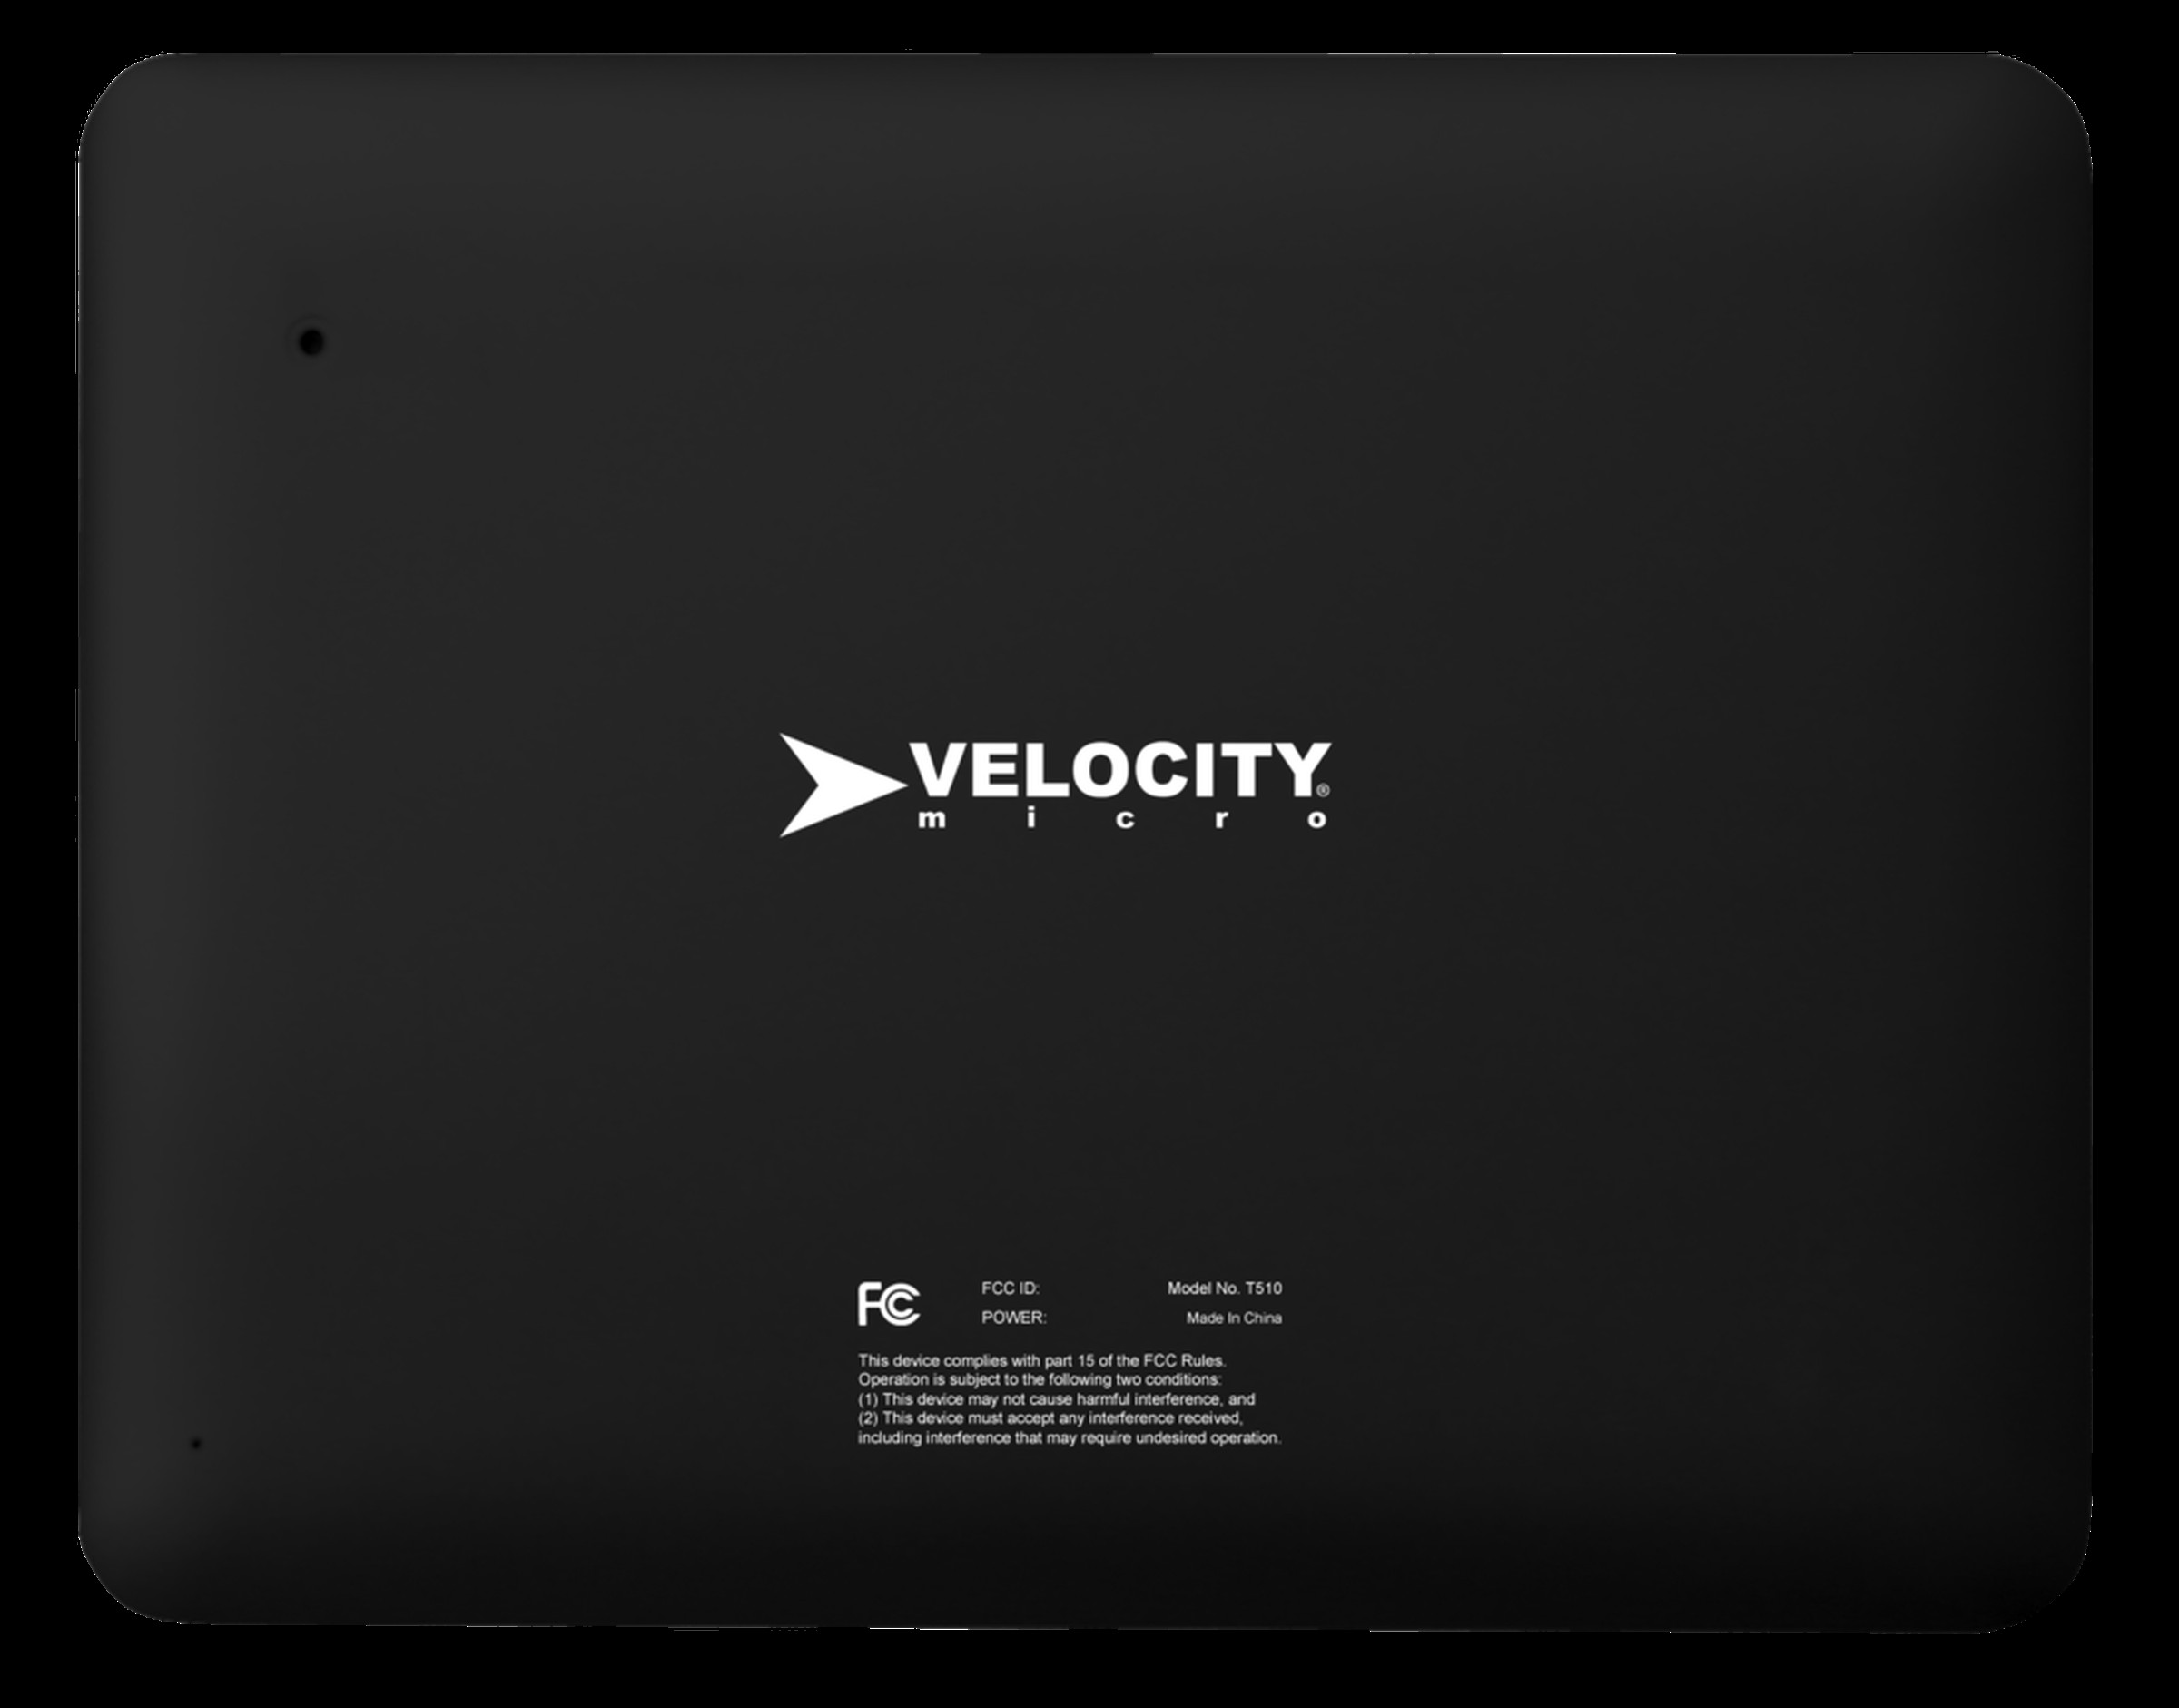 Velocity Micro Cruz T507 and T510 press images